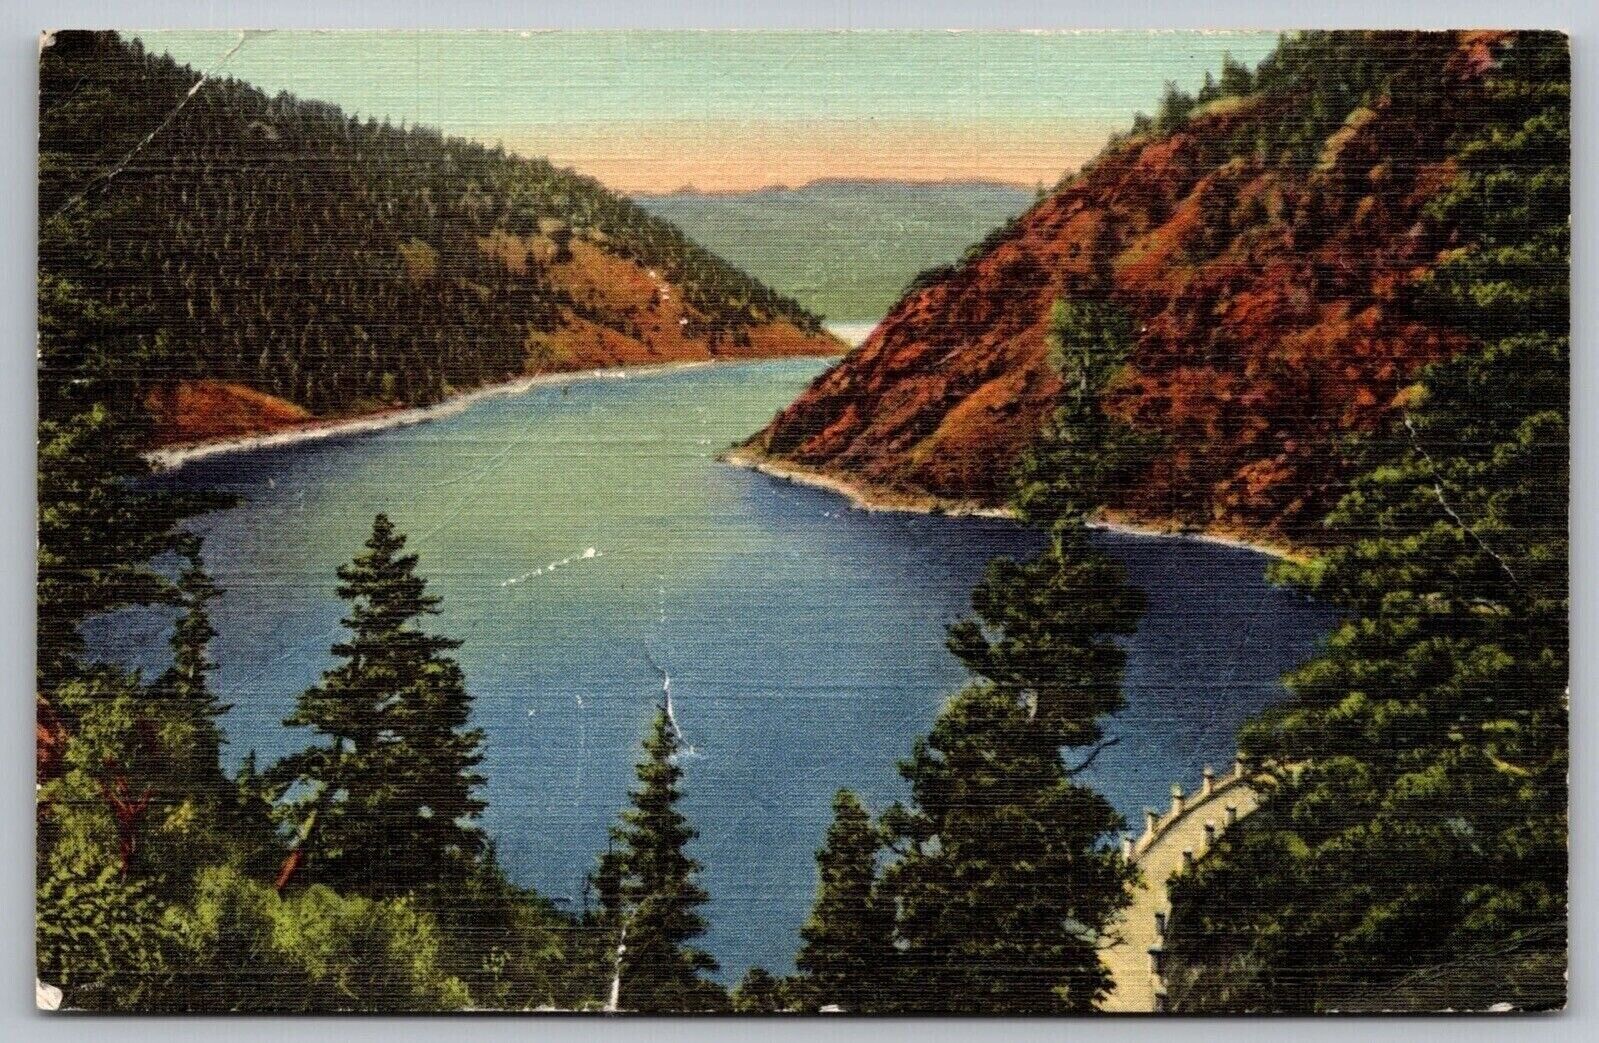 New Mexico Eagle Nest Lake & Dam Scenic Southwestern Landmark Linen Postcard